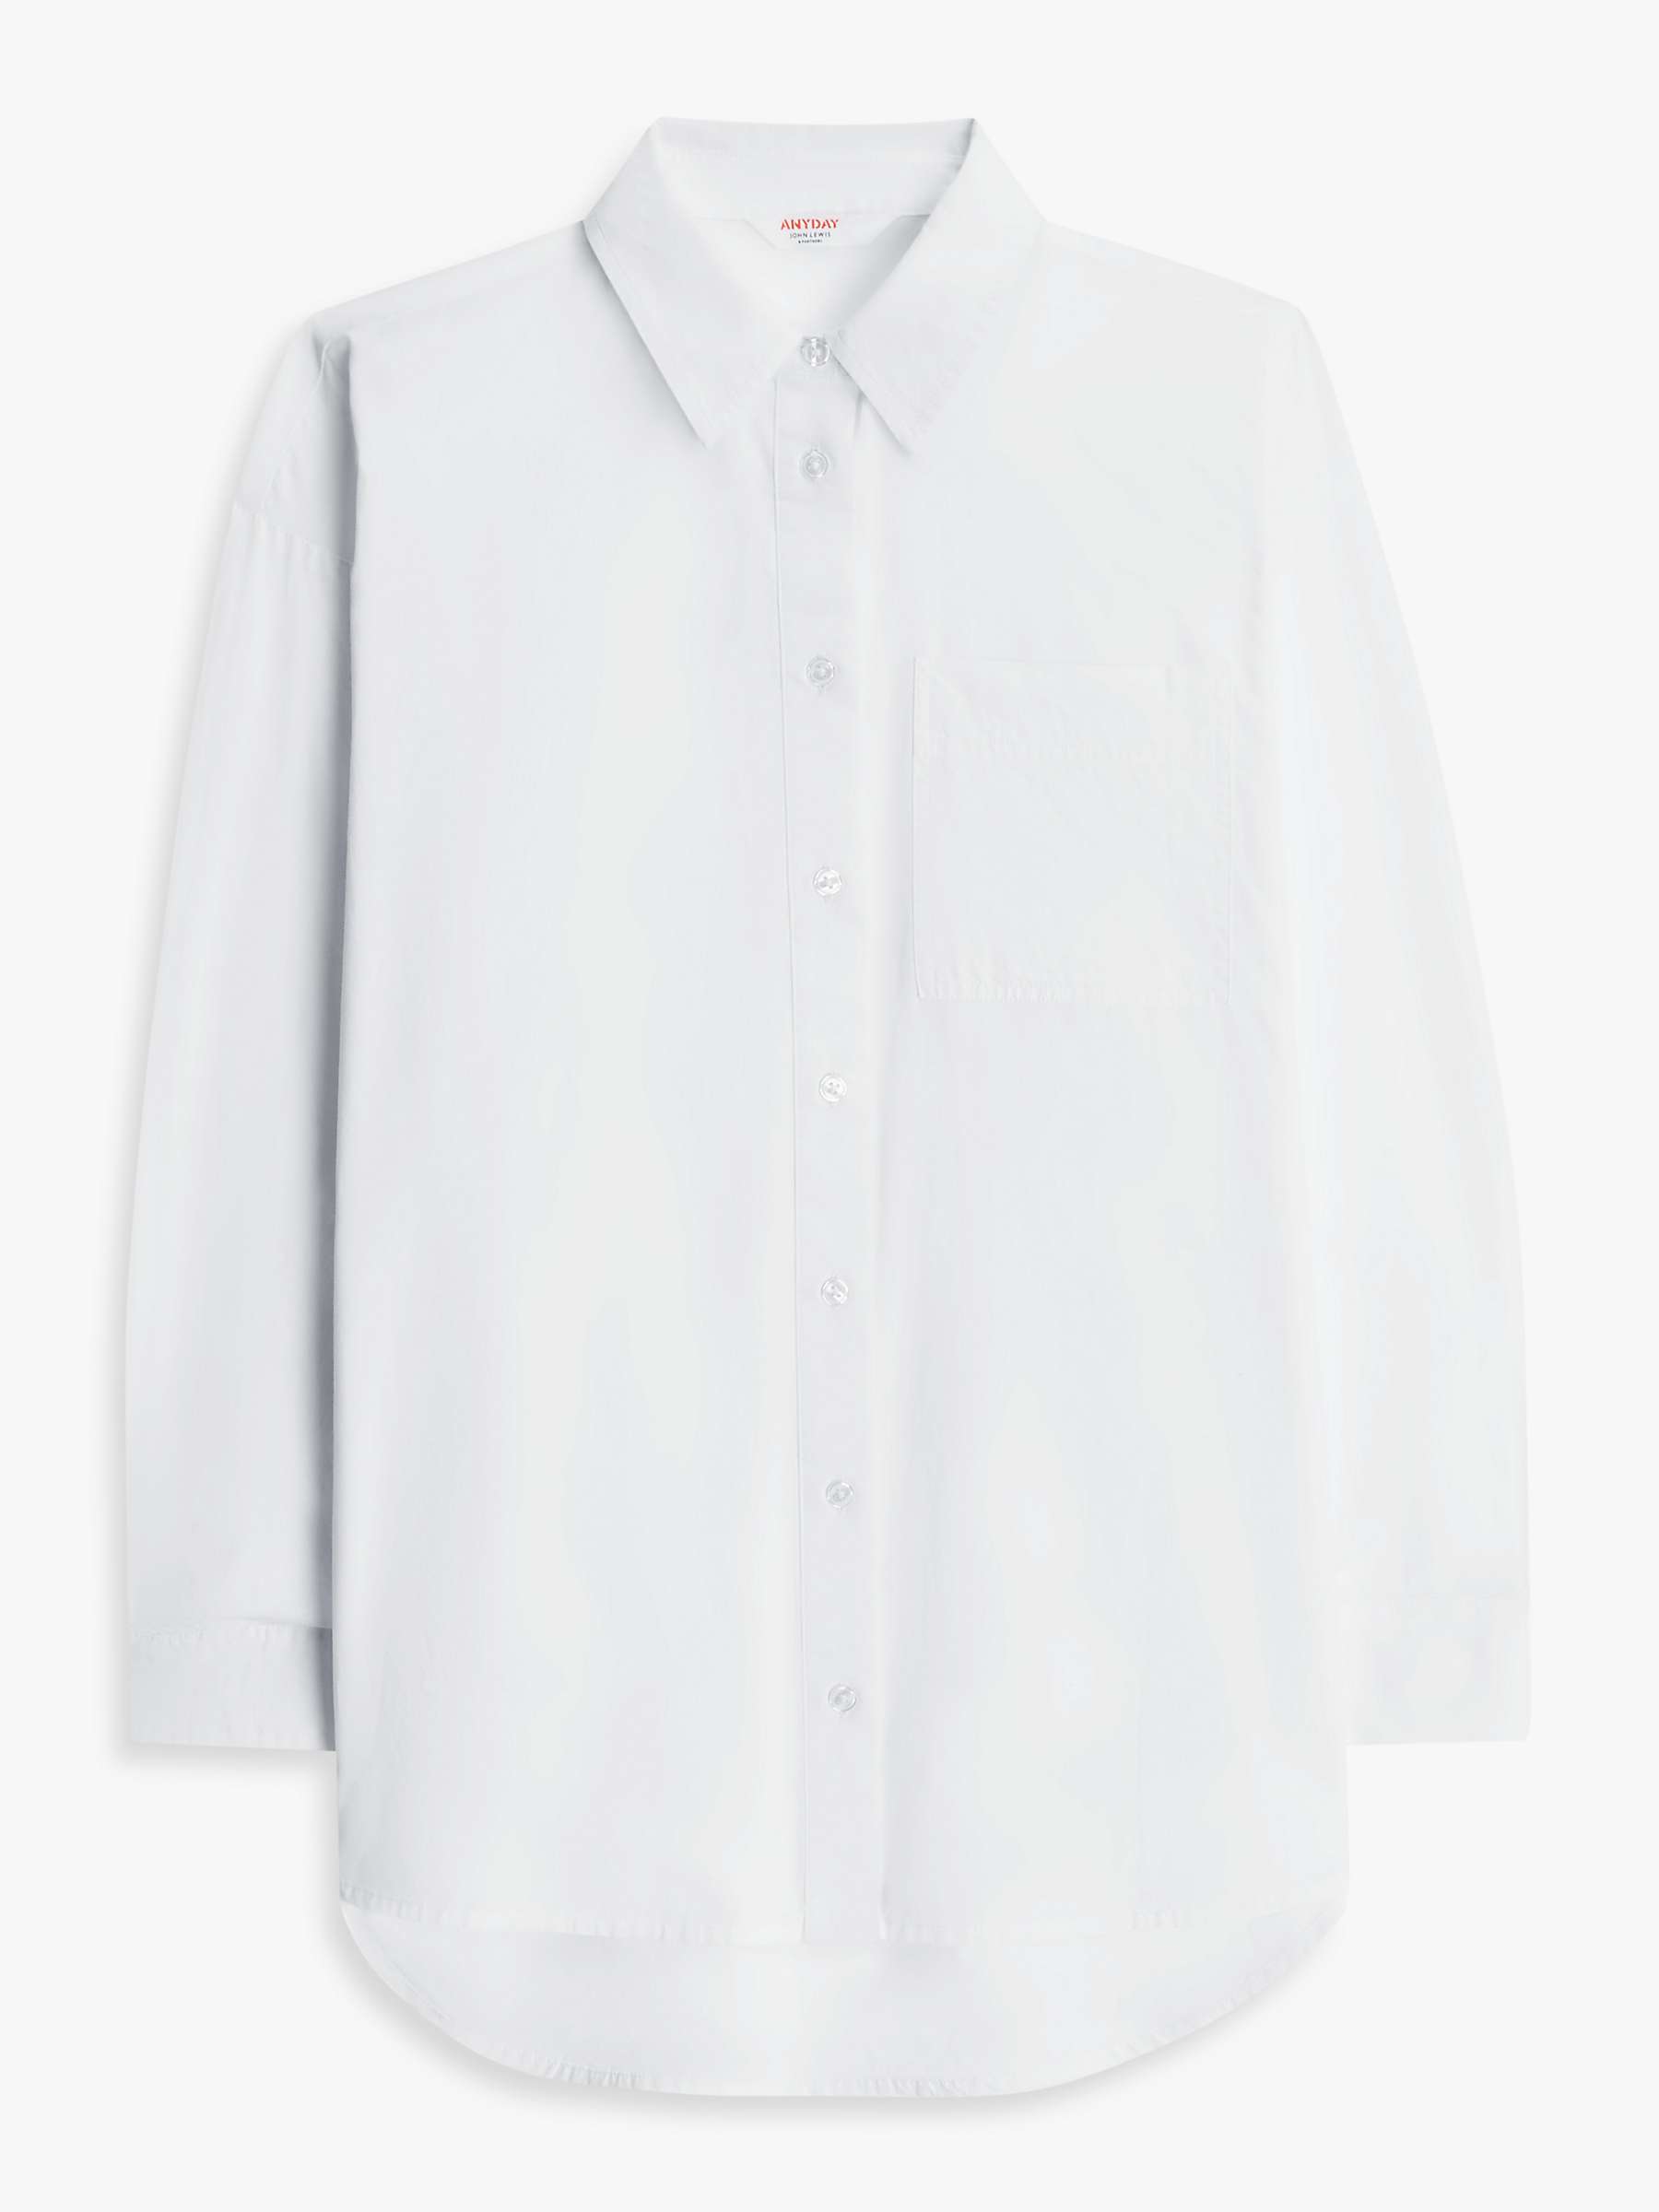 Buy John Lewis ANYDAY Plain Oversized Long Sleeve Shirt Online at johnlewis.com